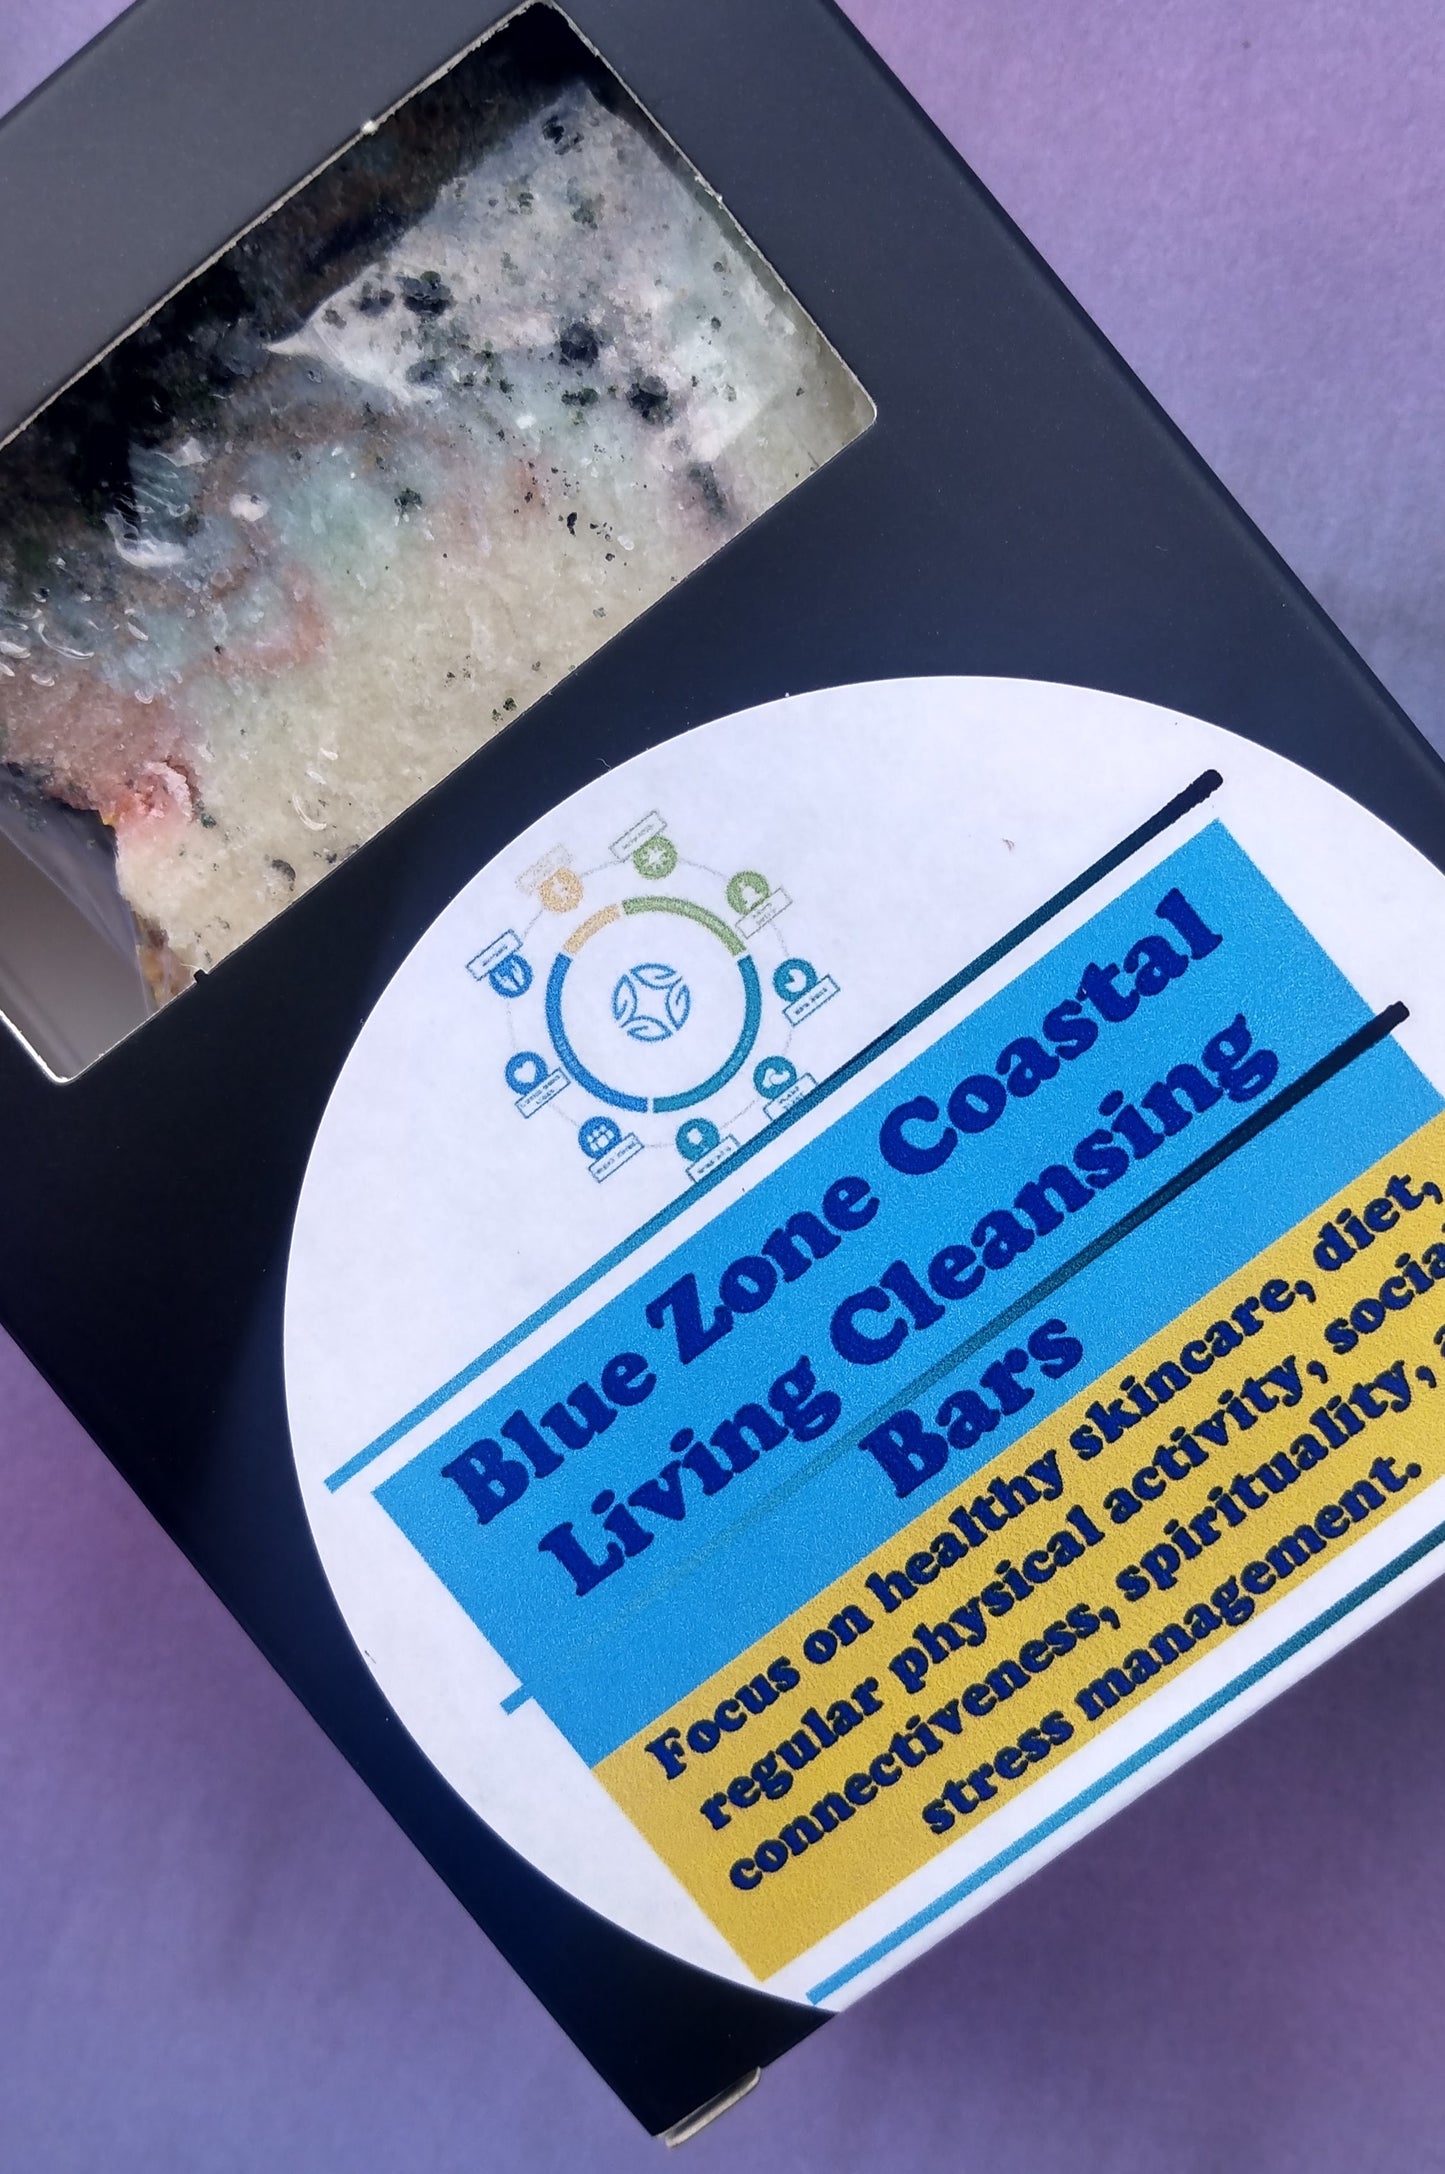 Blue Zone Living " Blue Tide Bliss" Cleansing Soap Bar